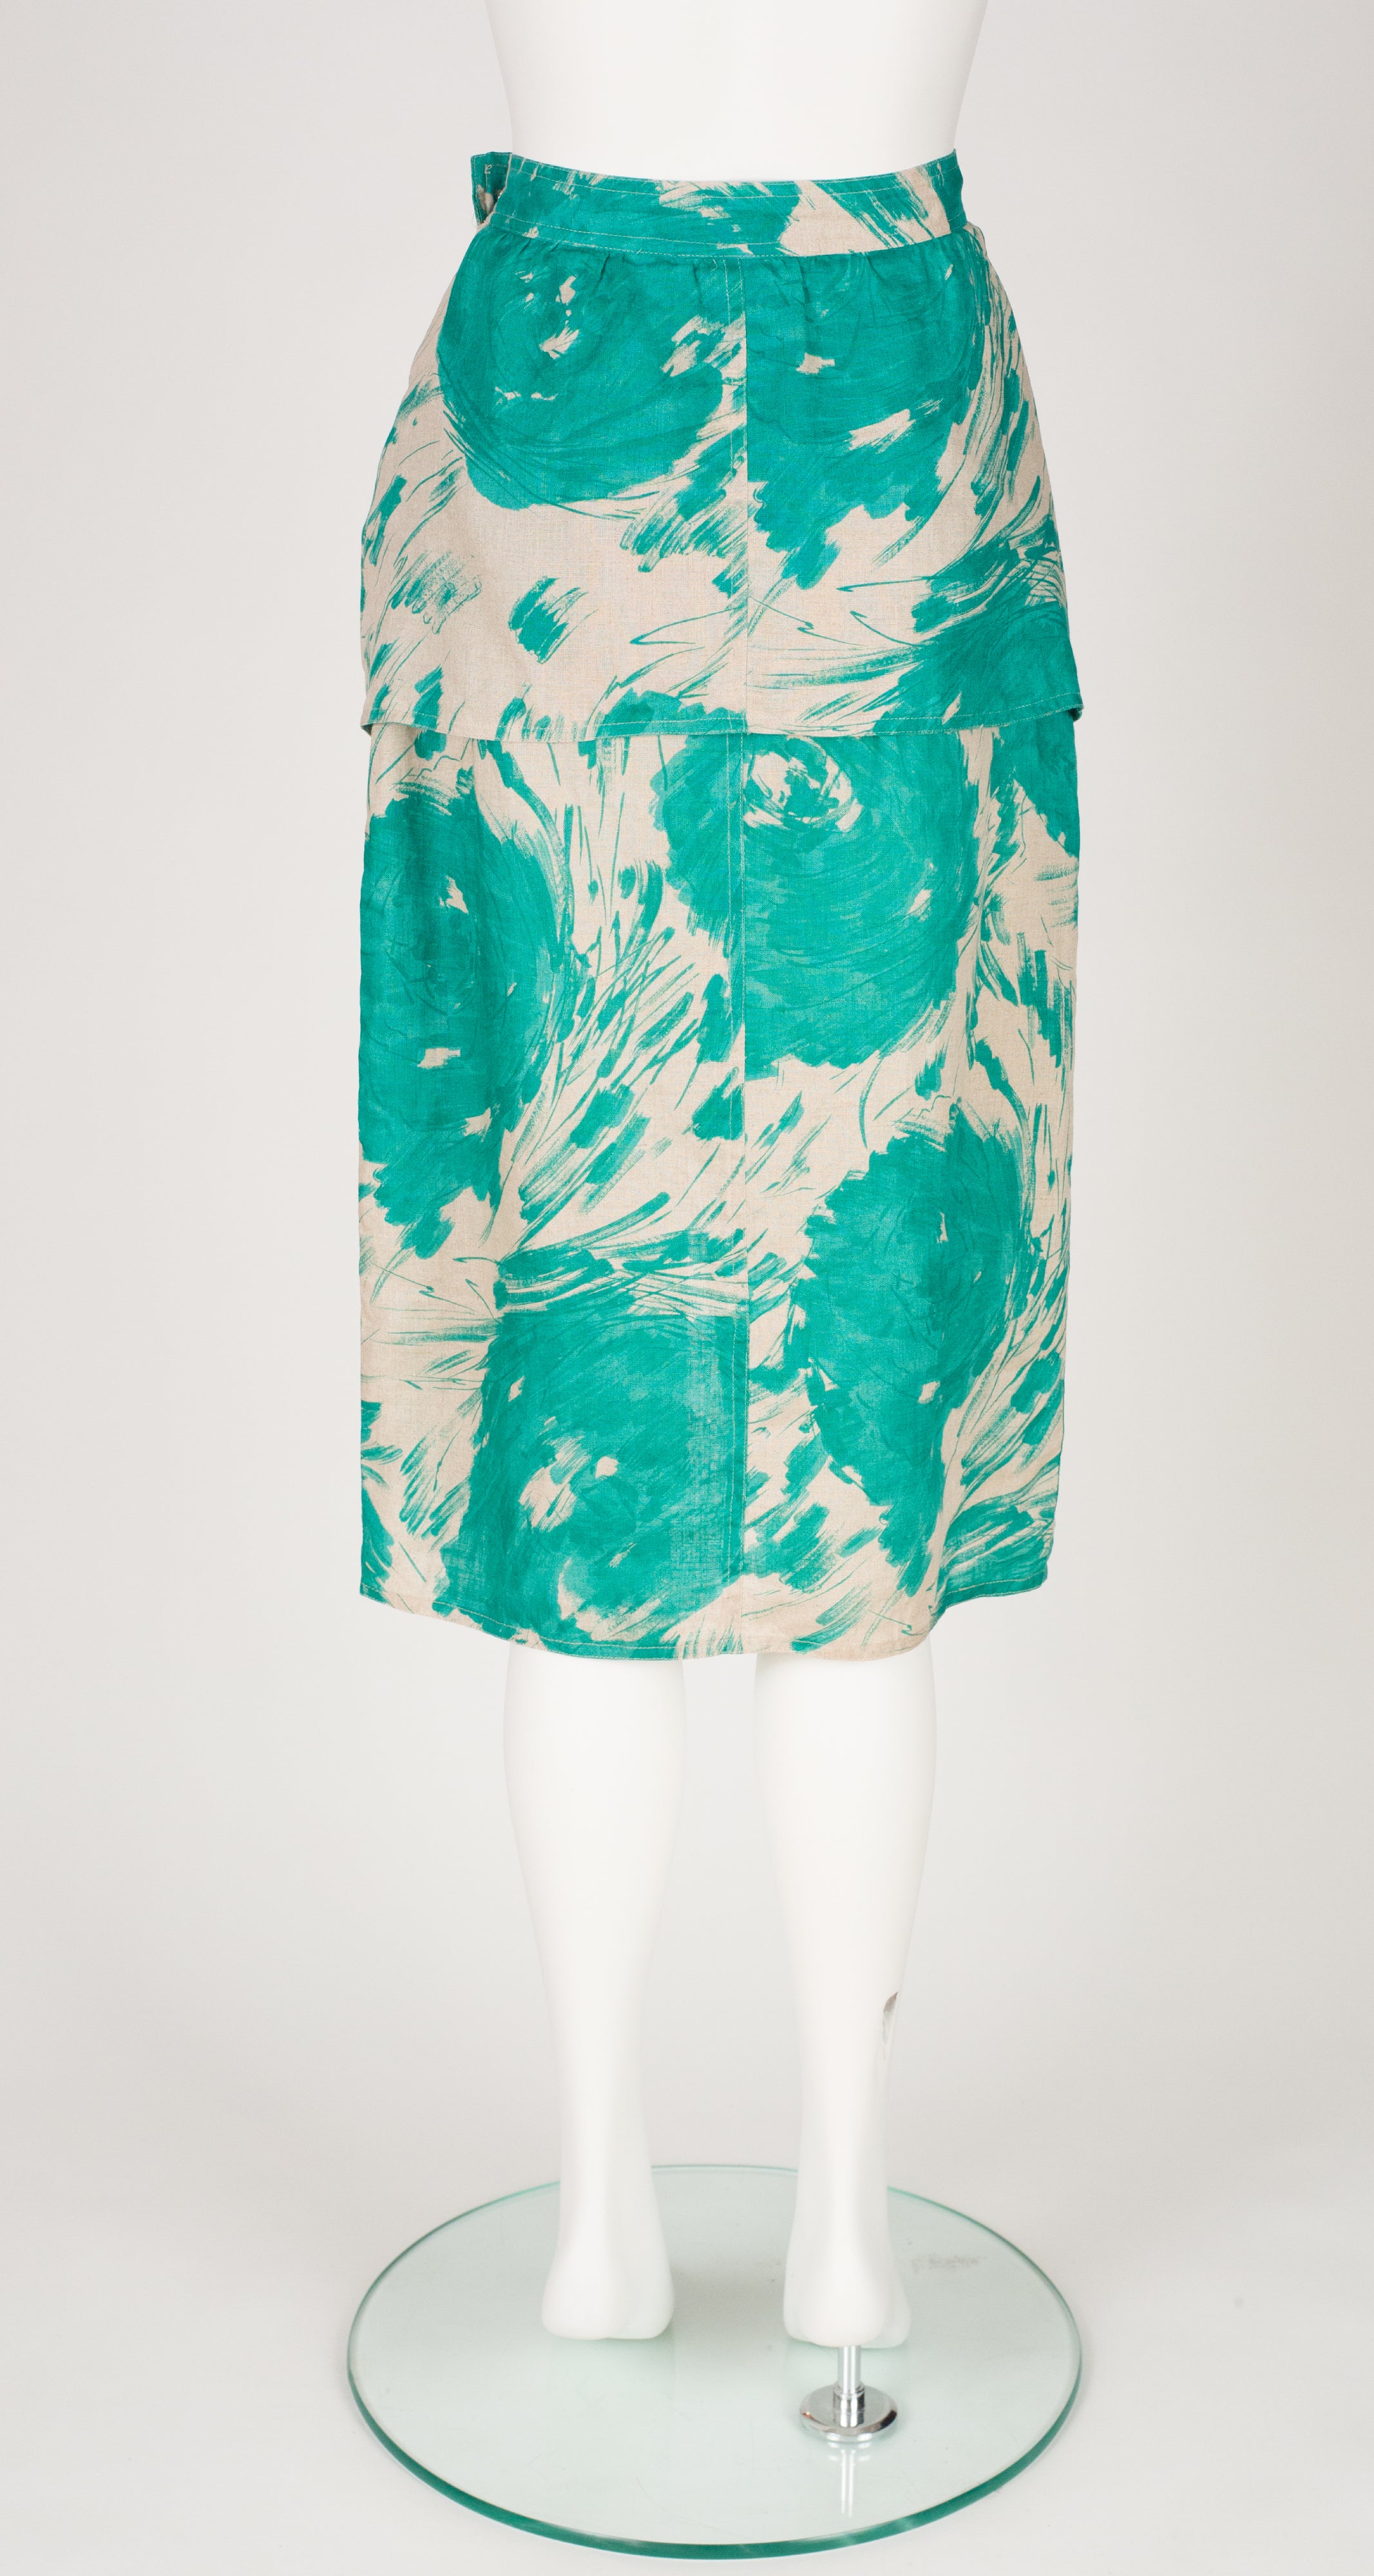 1980s Teal Graphic Linen Blouse & Skirt Set